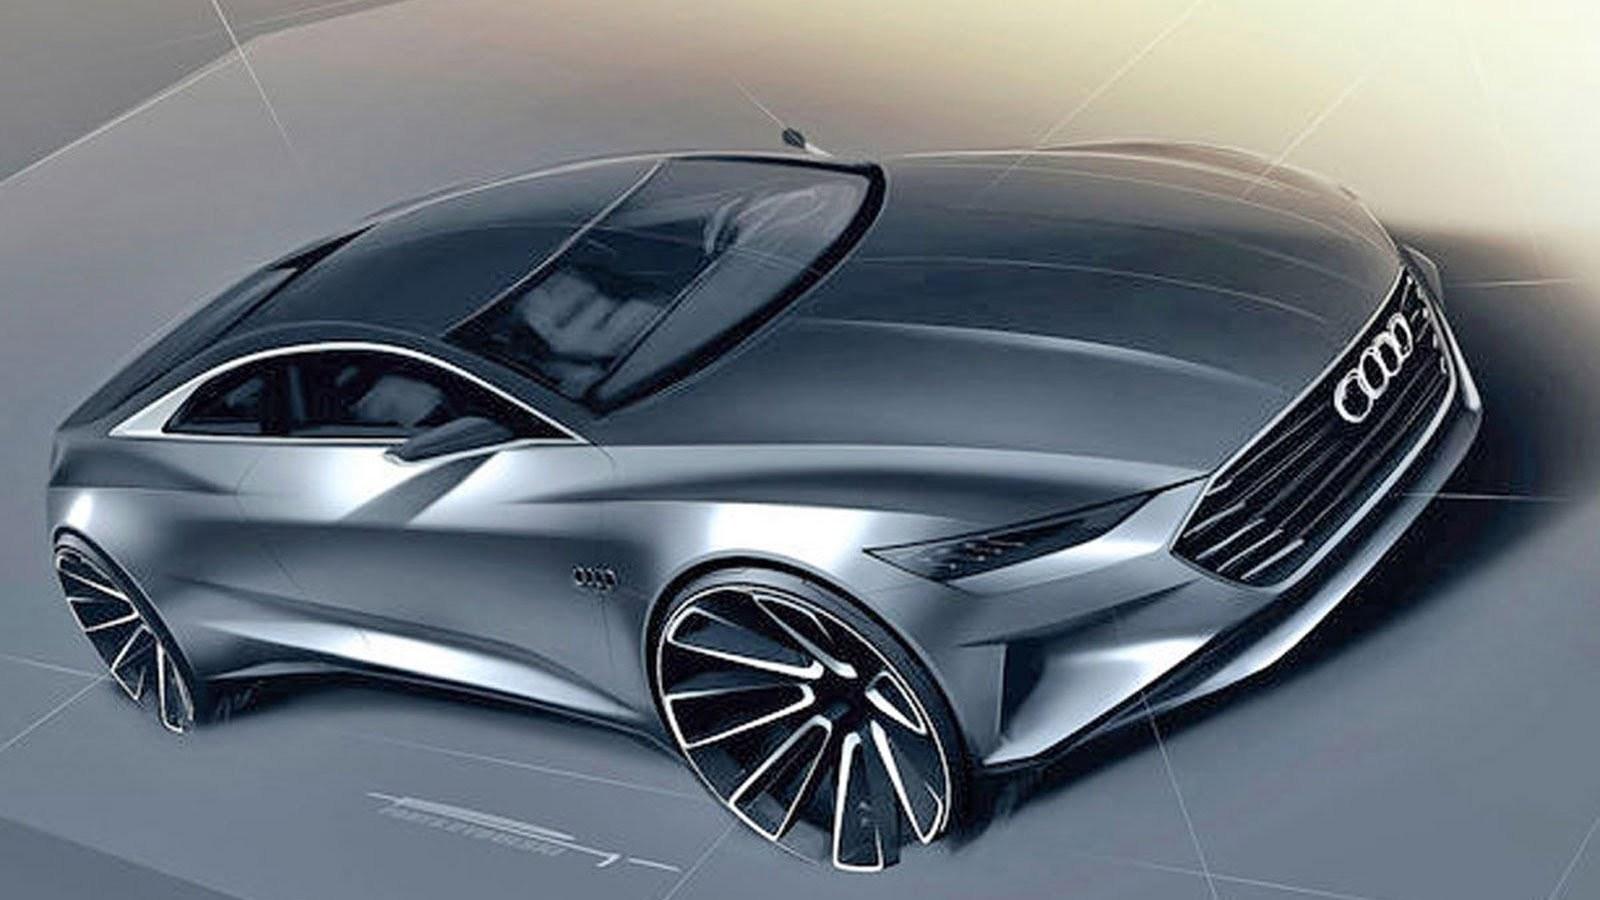 Audi A9 E Tron Wants To Kill Tesla 2020 Luxury4play for 2020 Audi A9